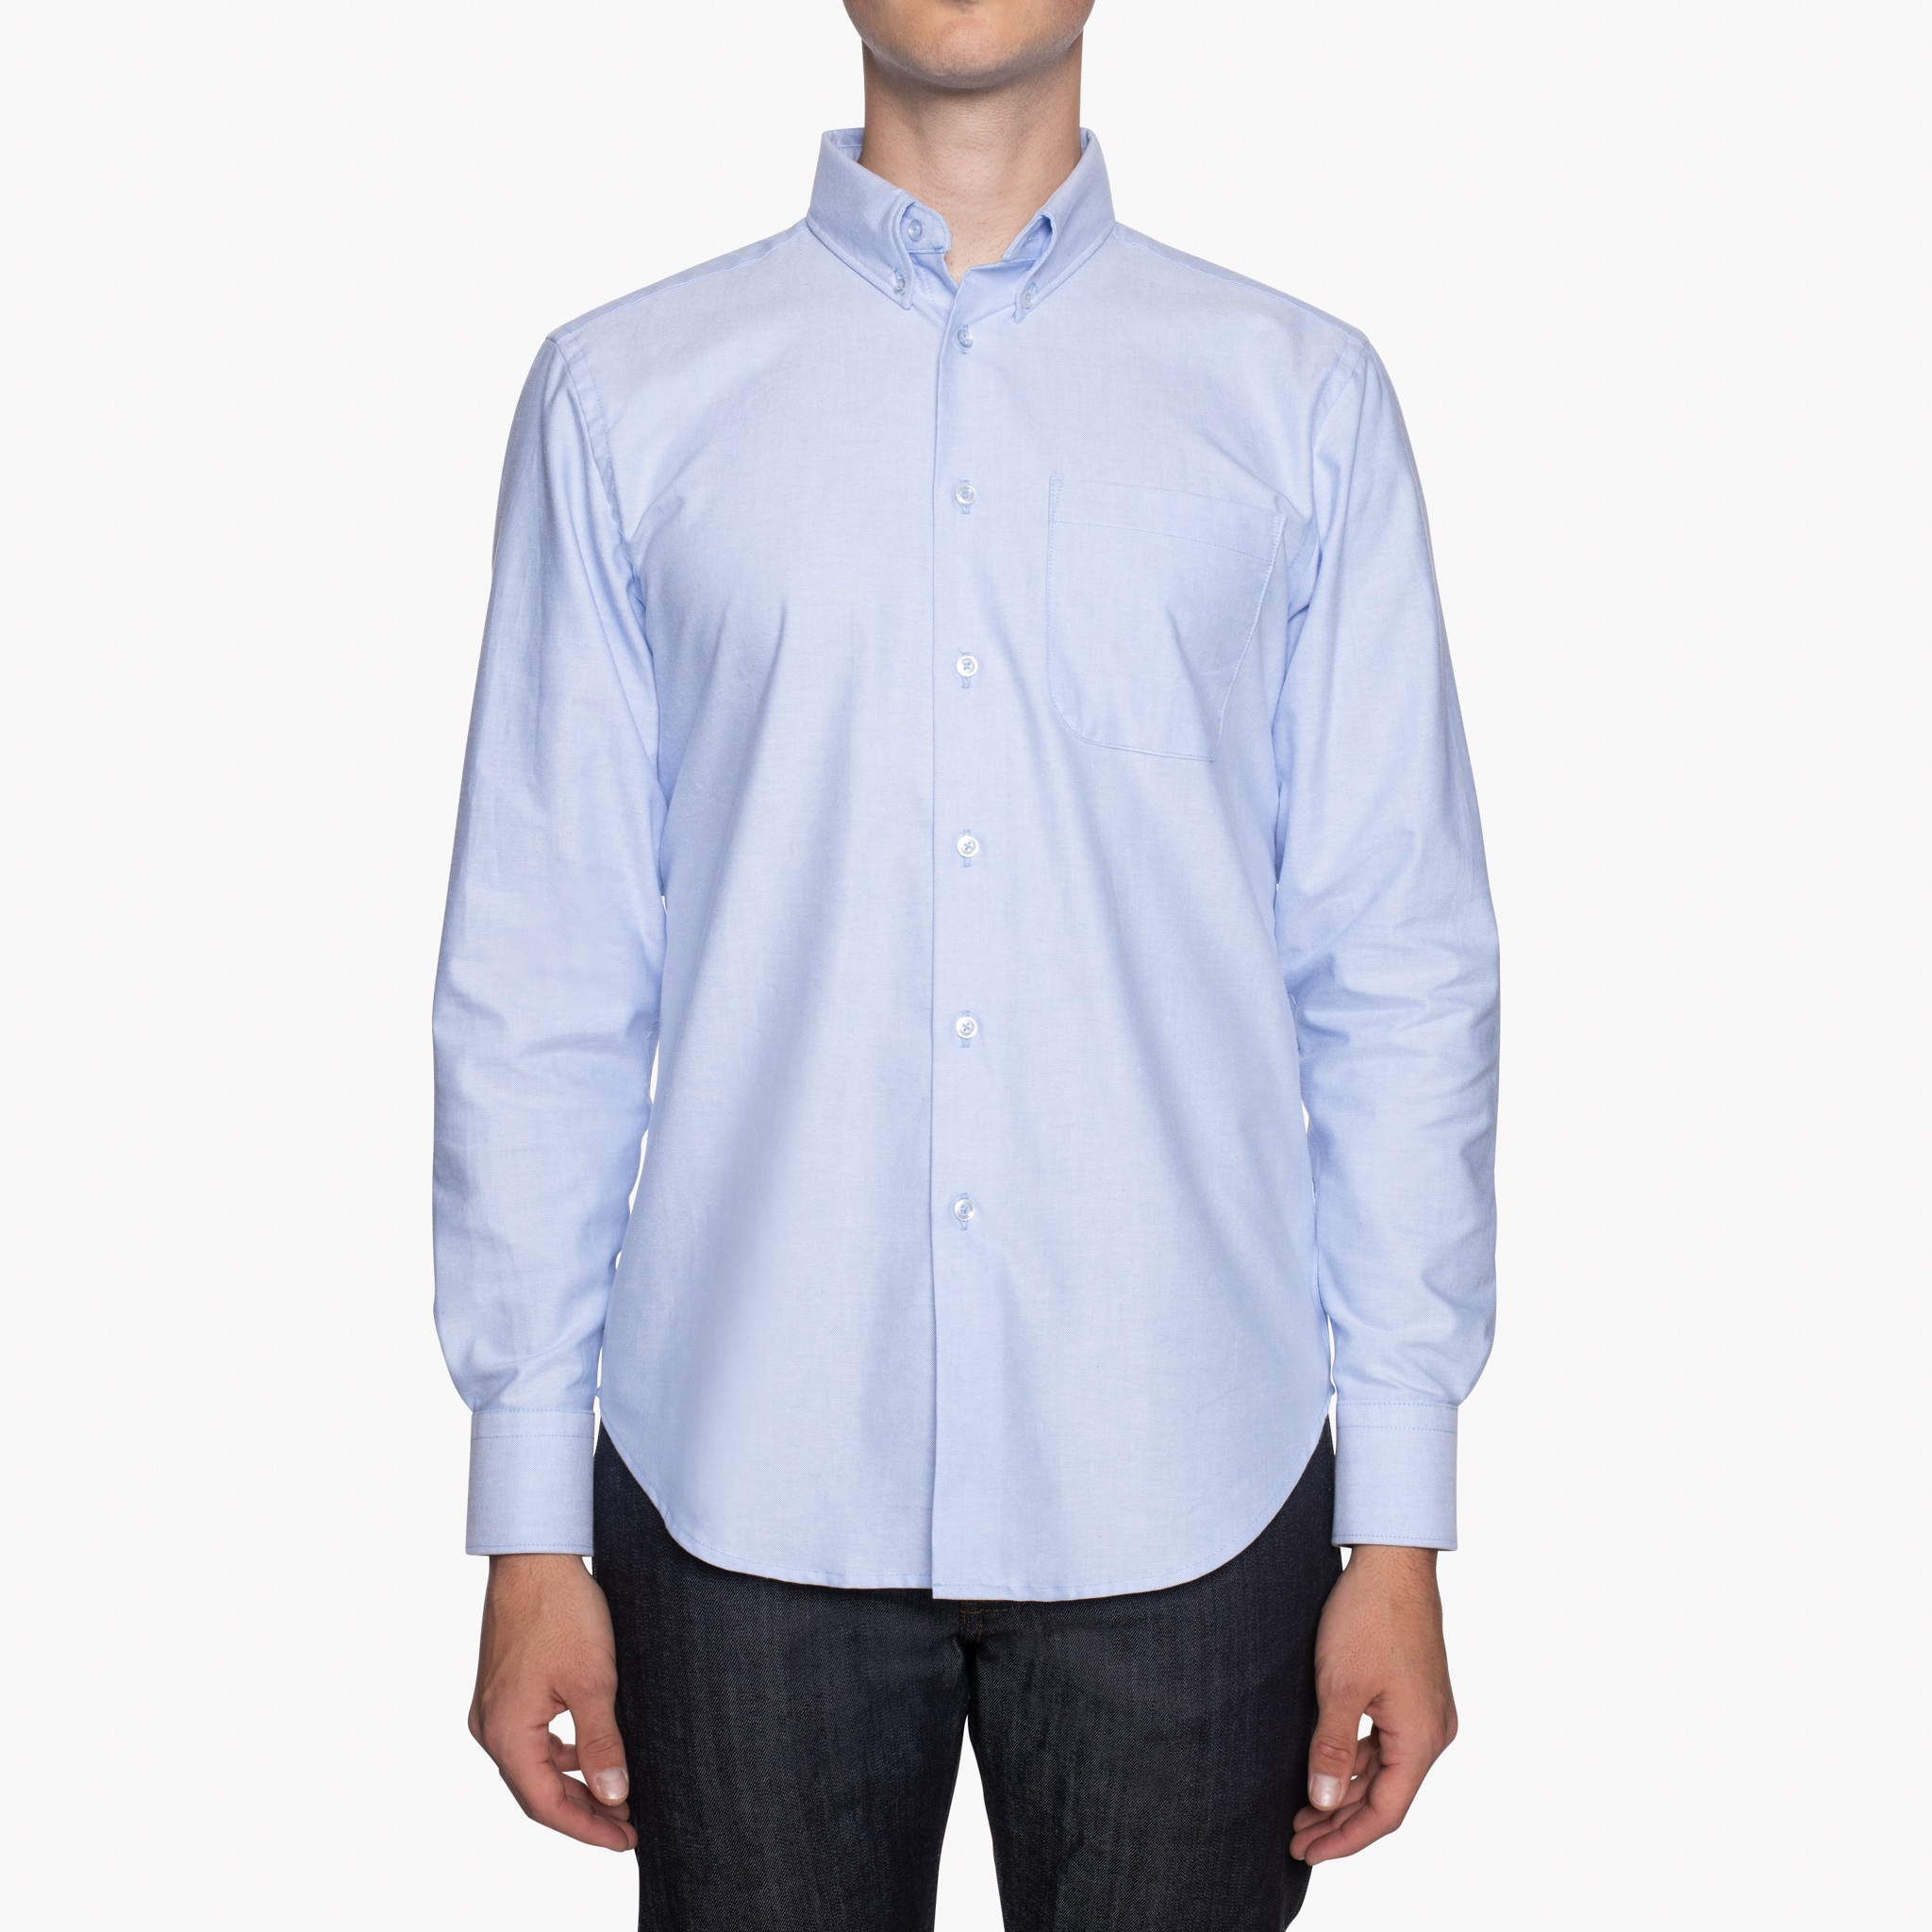  Easy Shirt - Cotton Oxford - Pale Blue - front 